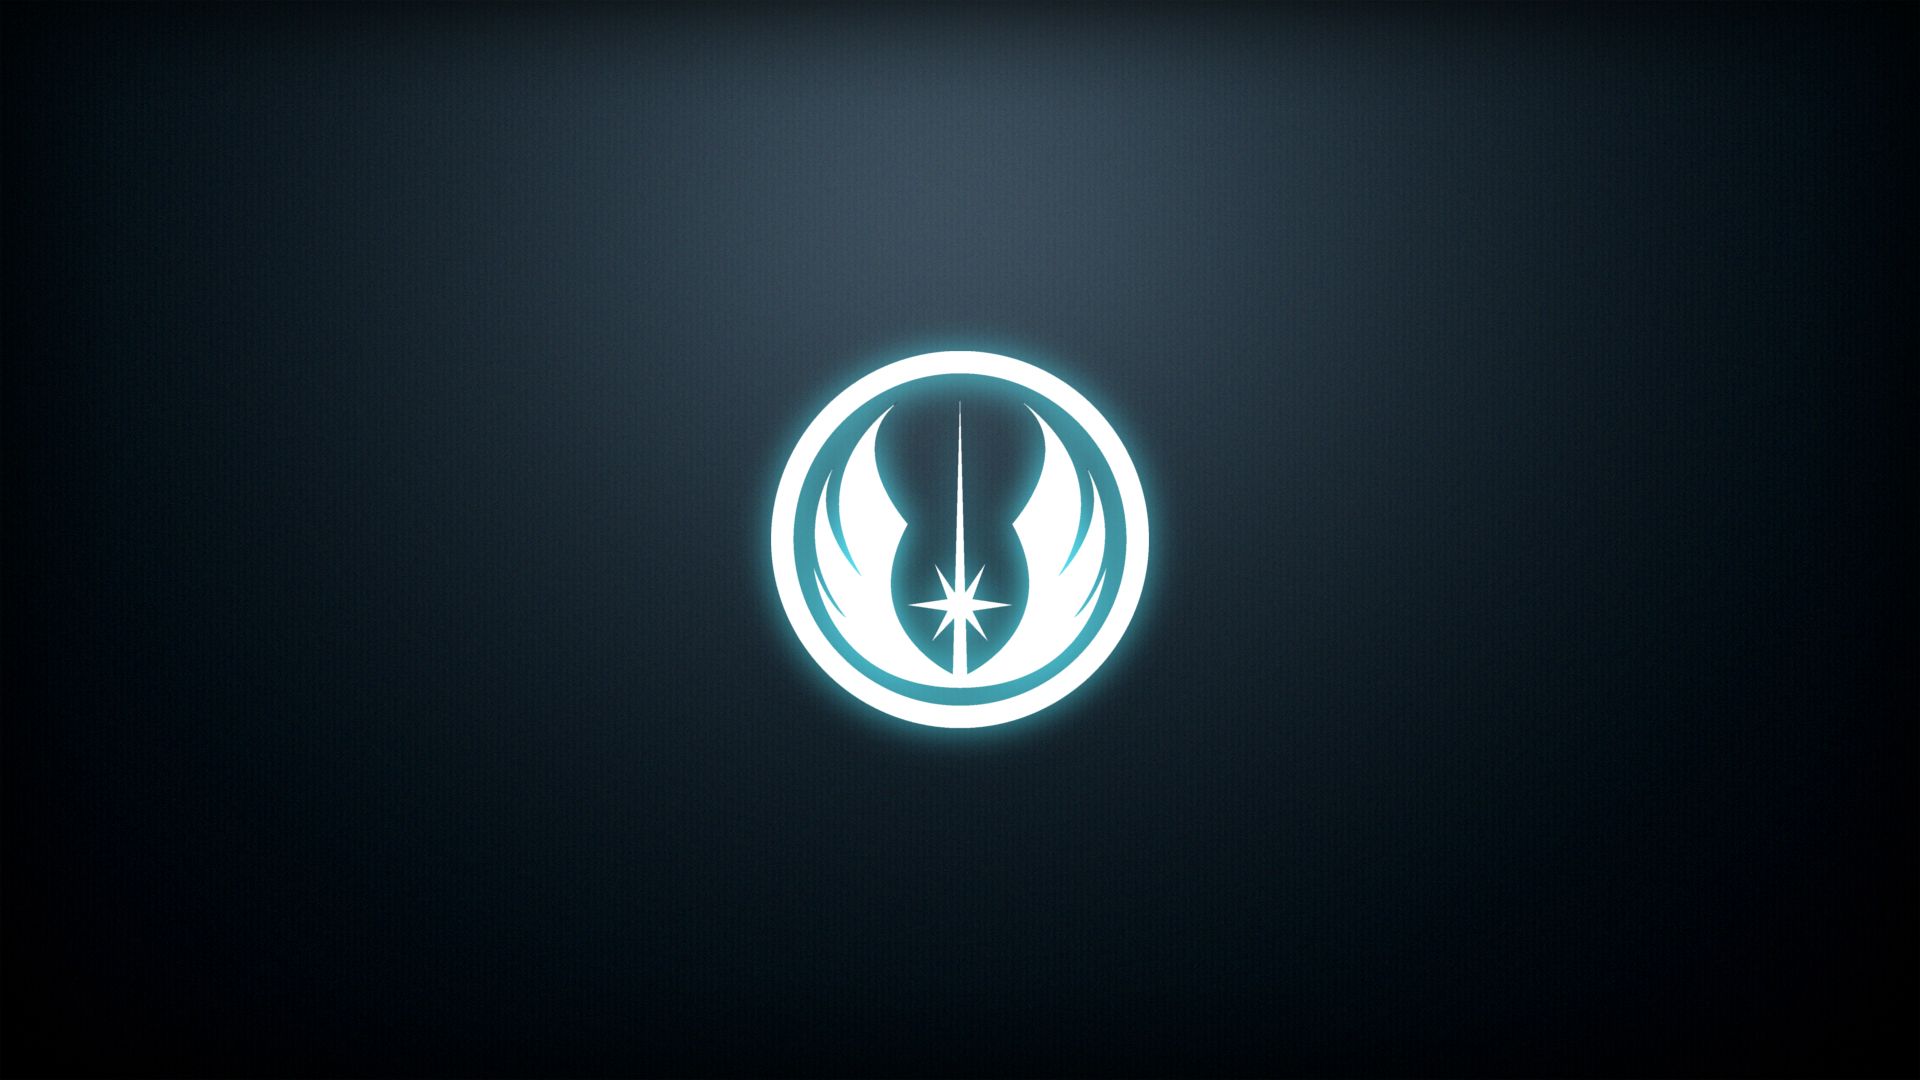 Gallery For gt Jedi Order Logo